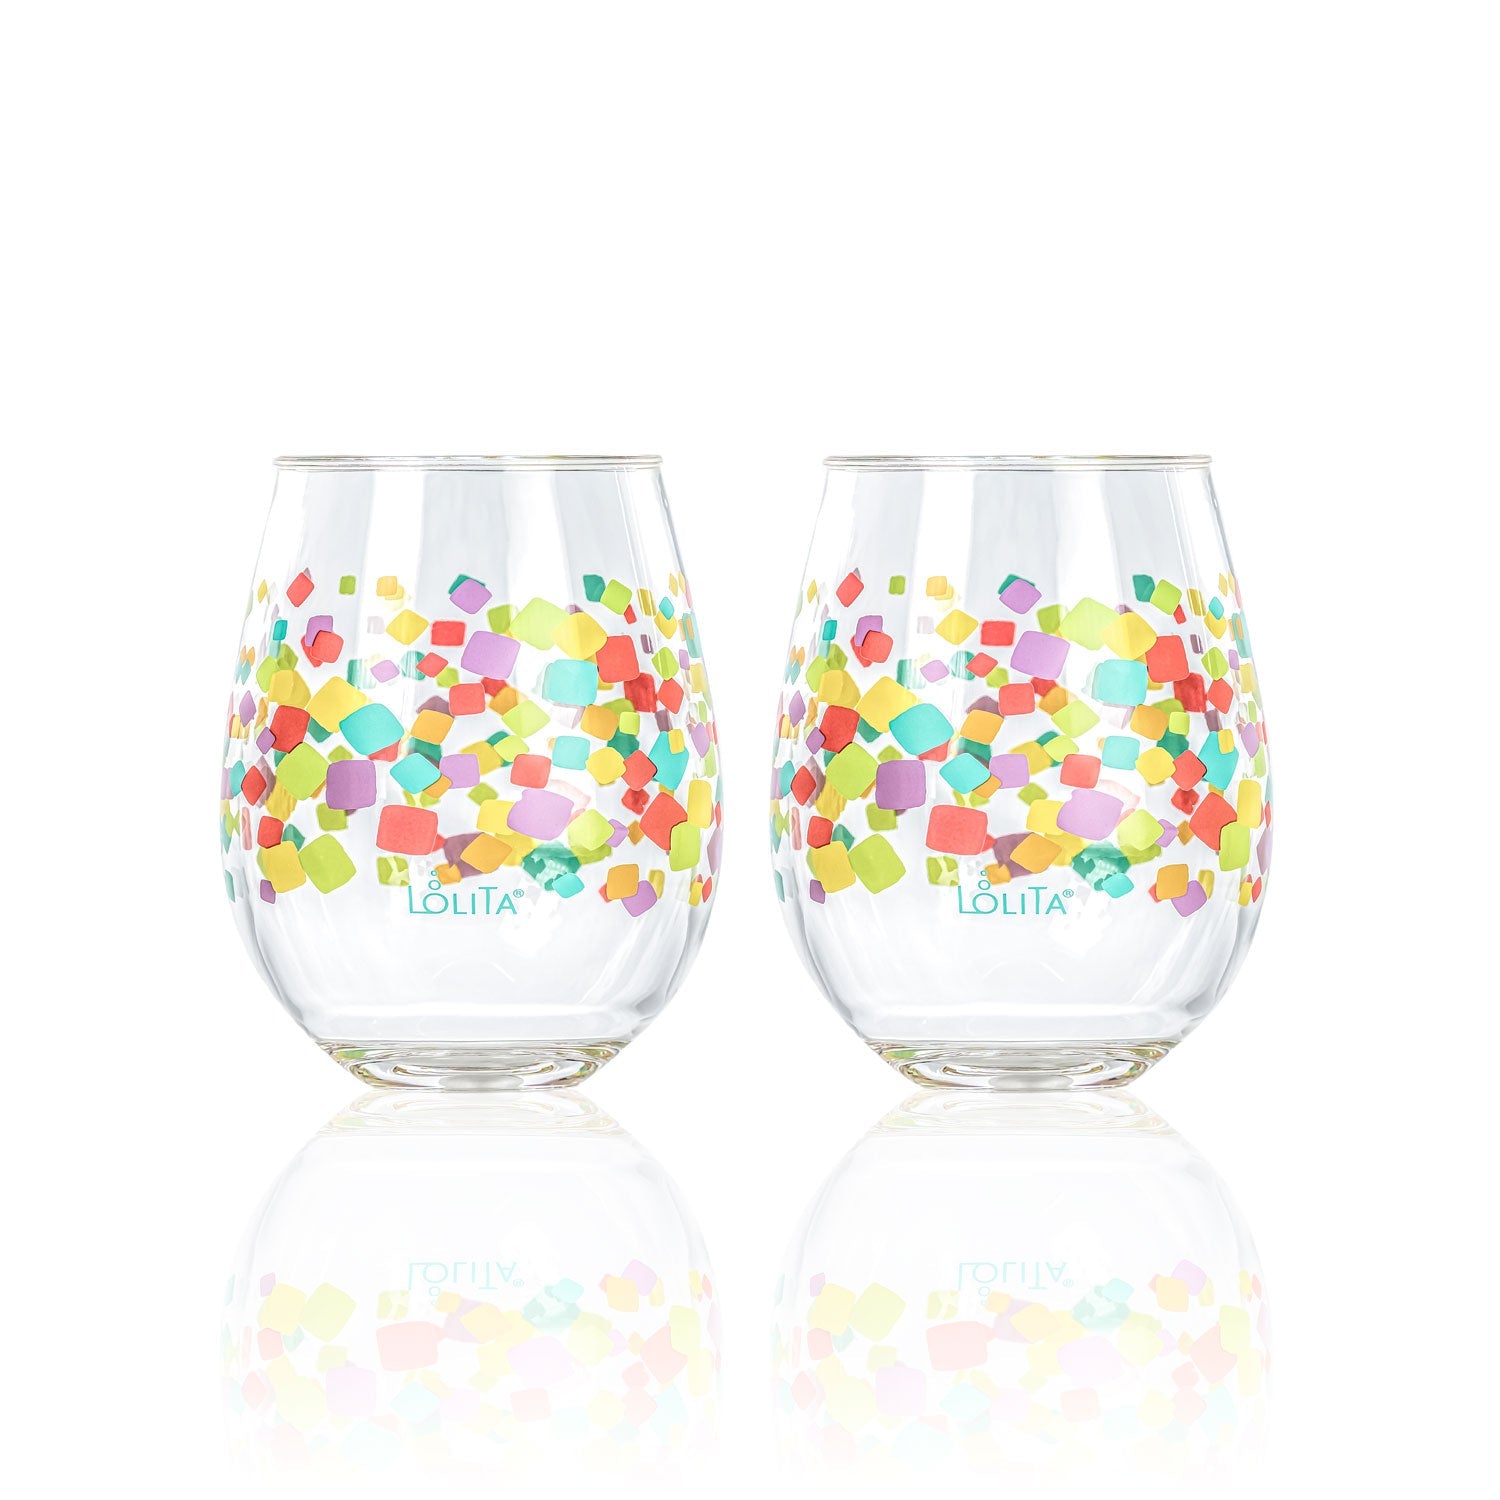 Lolita Confetti Party to go 15oz Acrylic Stemless Wine Glasses set of 2